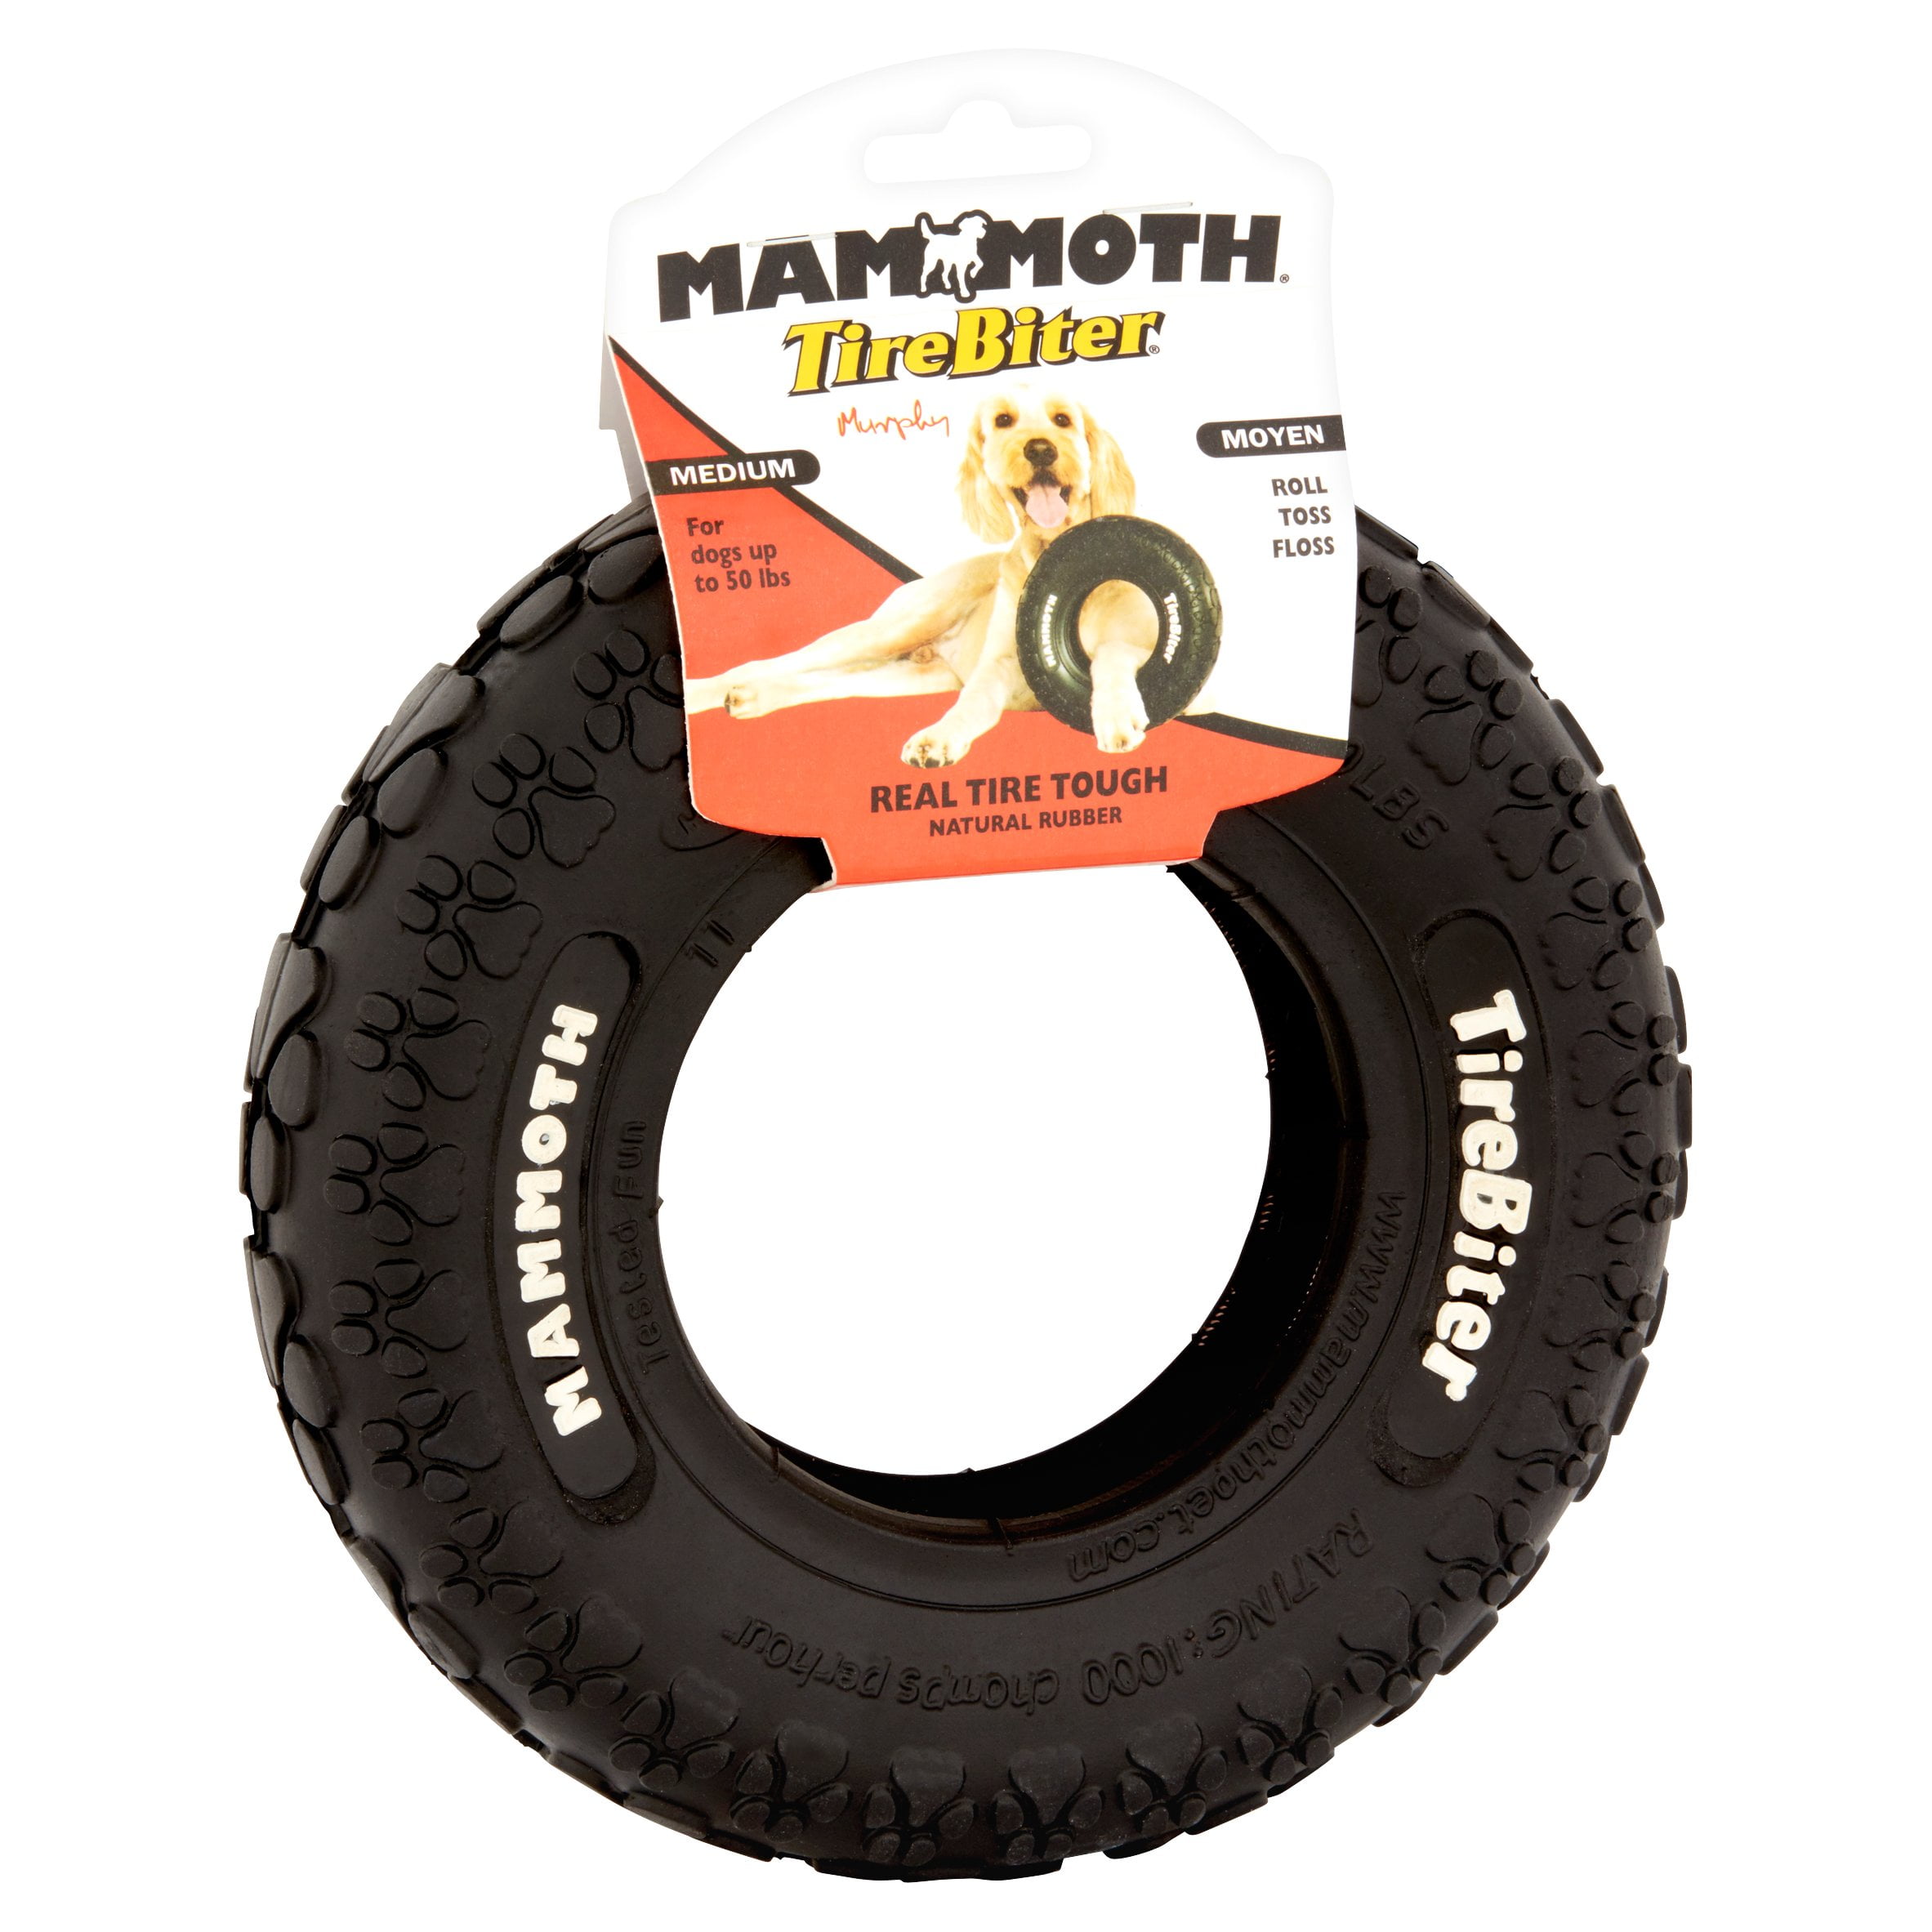 Mammoth TireBiter Rubber Tire Dog Toy 